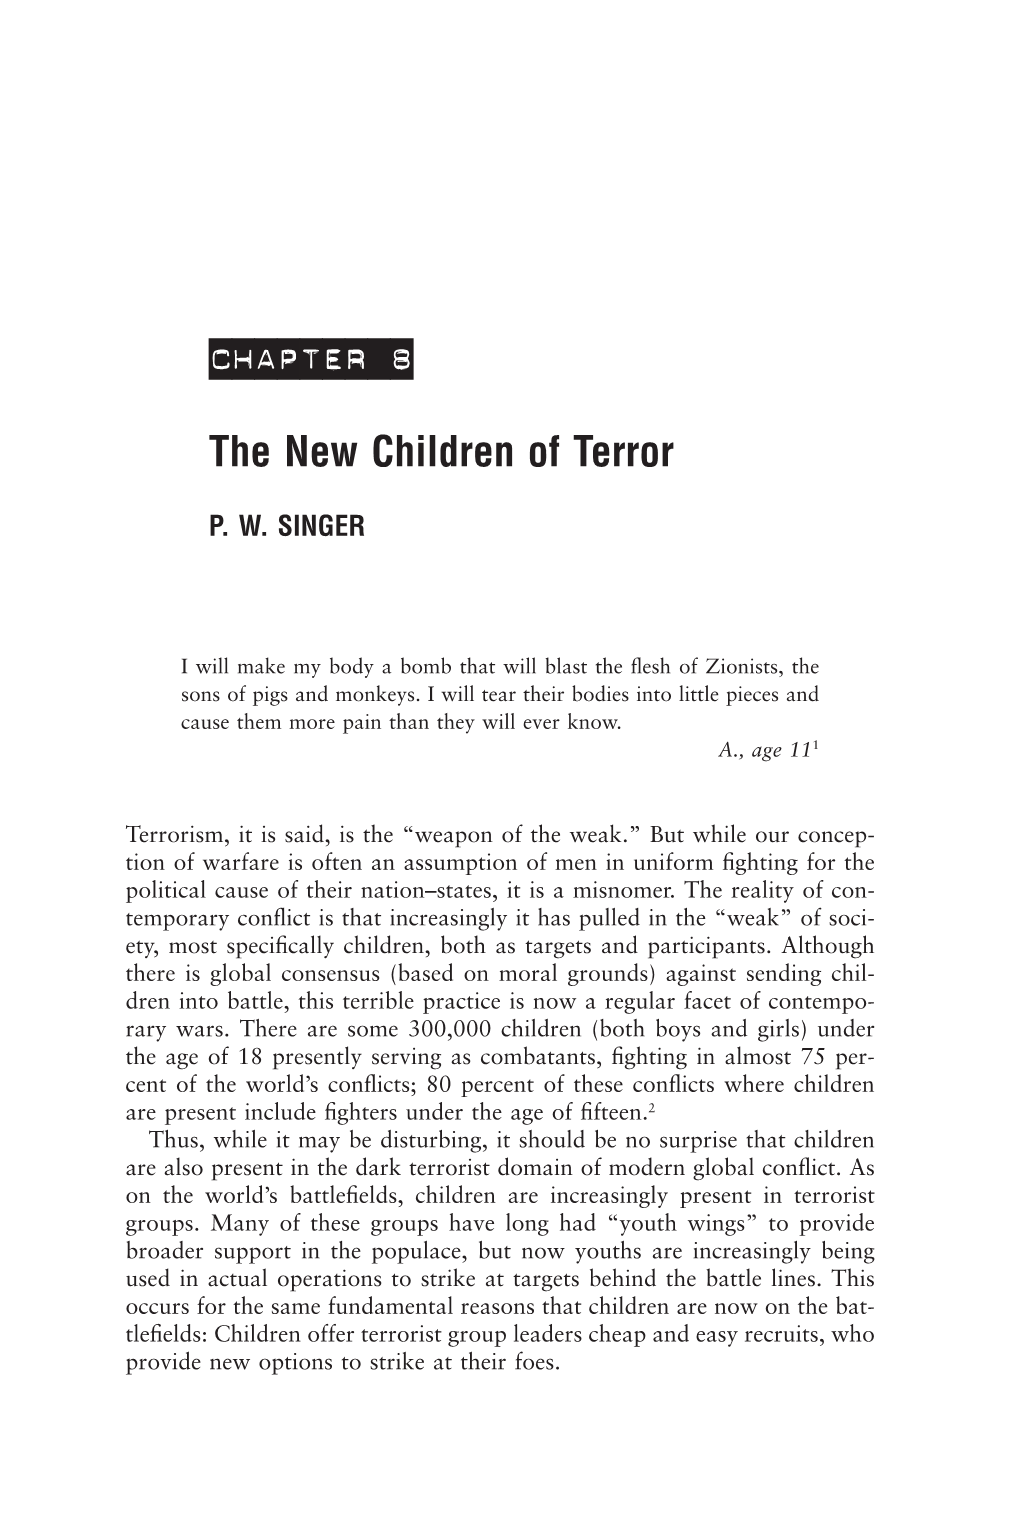 Chapter 8 the New Children of Terror